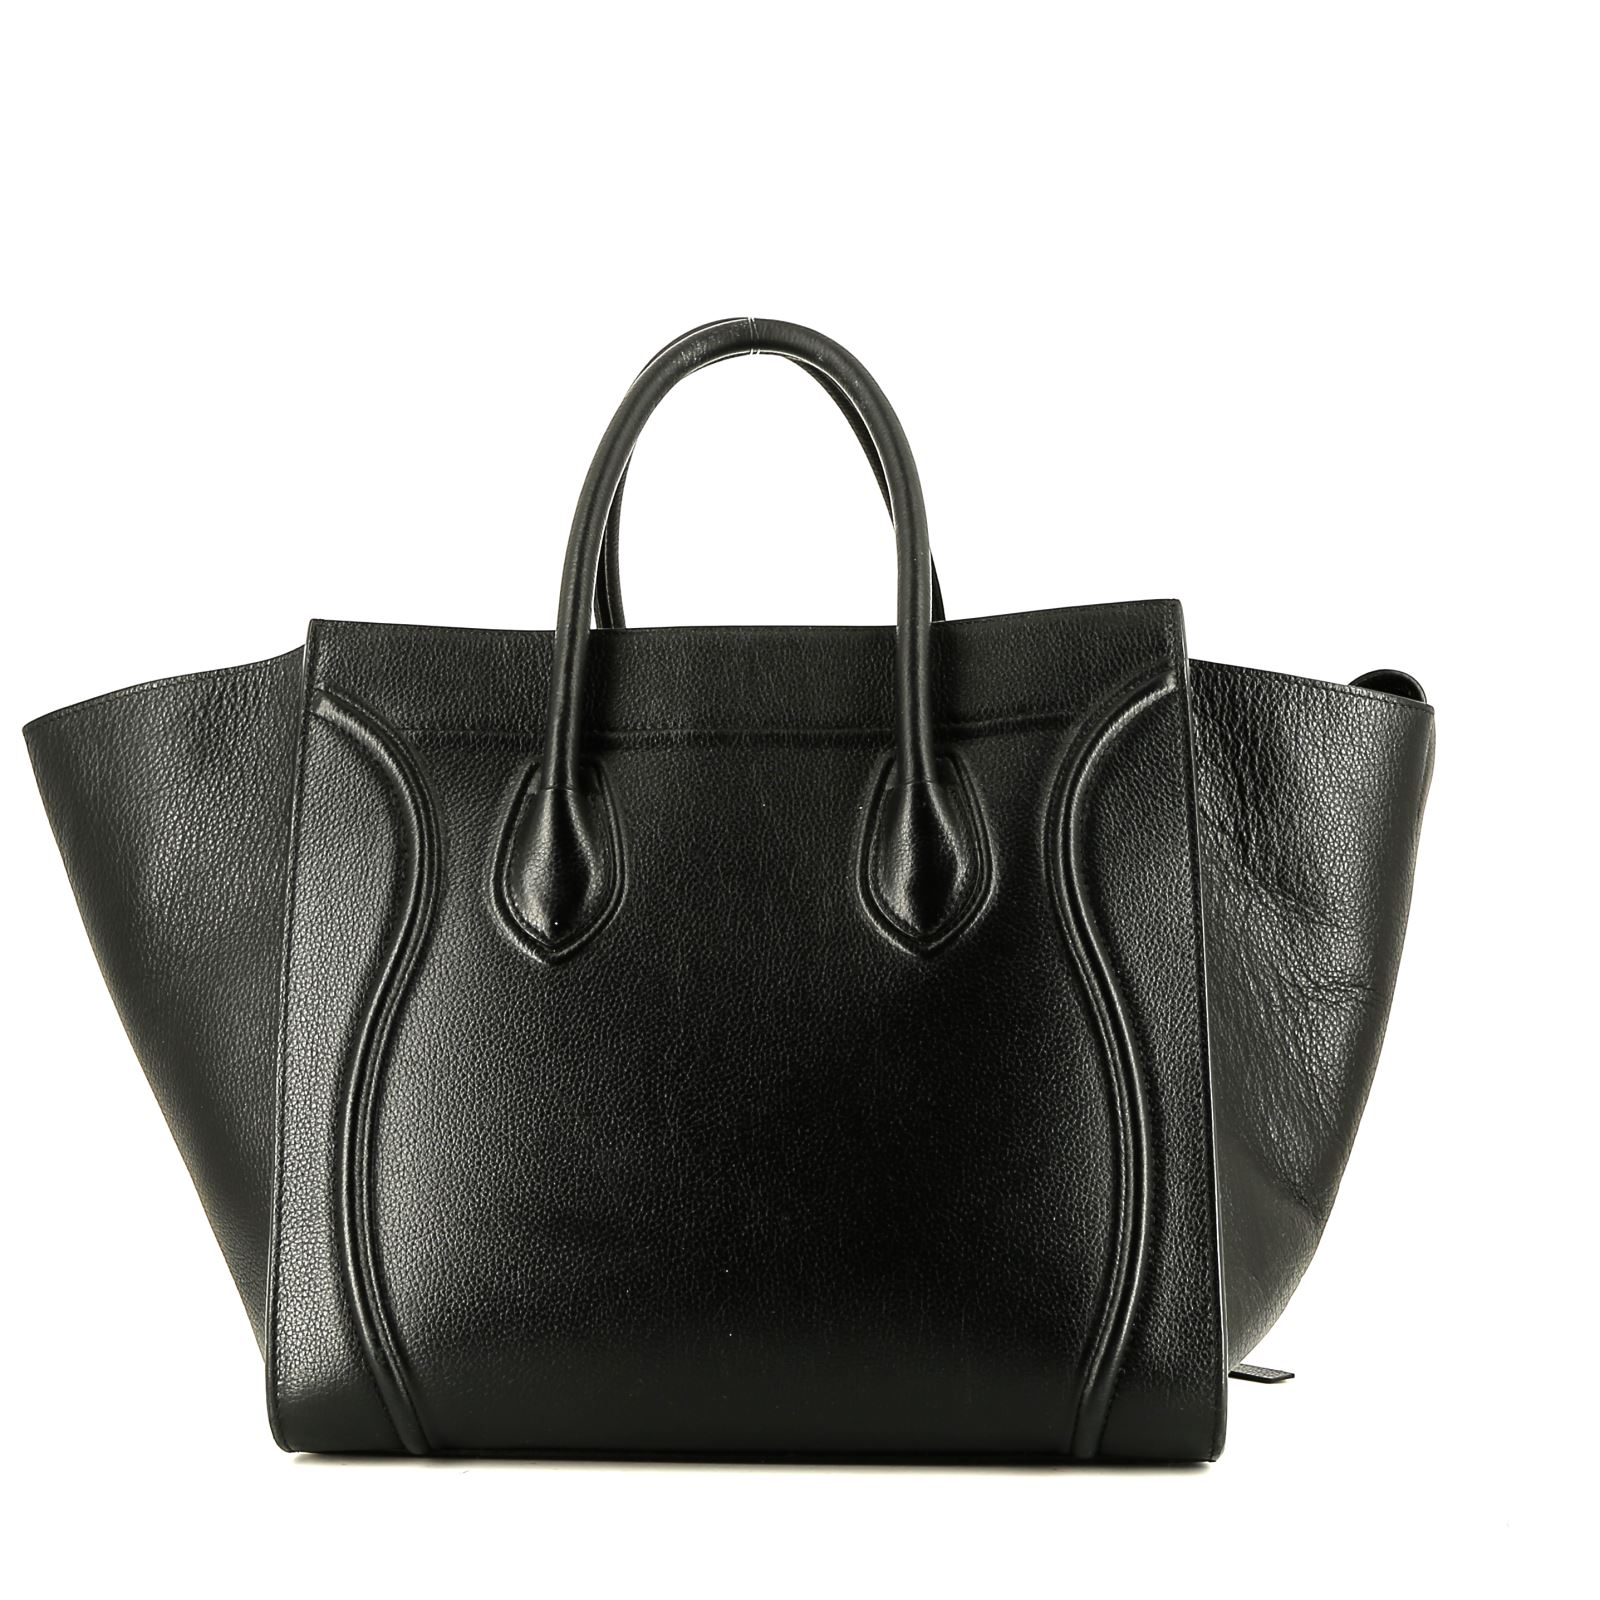 Phantom Handbag In Black Grained Leather